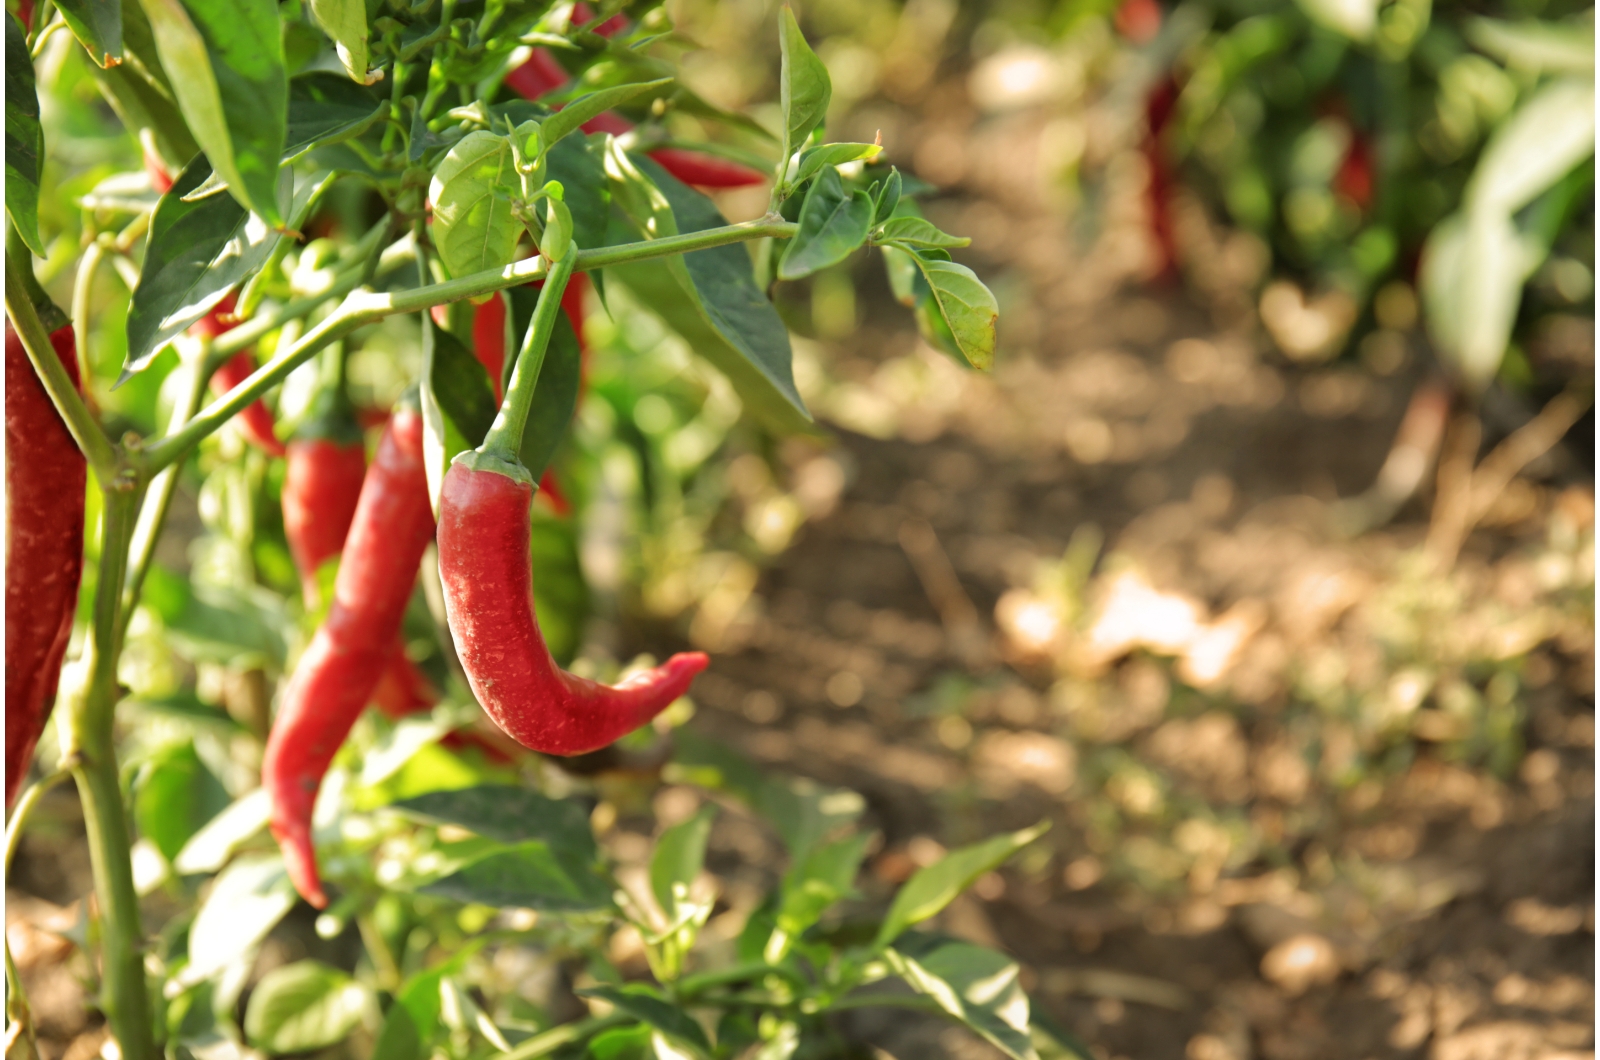 chili pepper in a garden